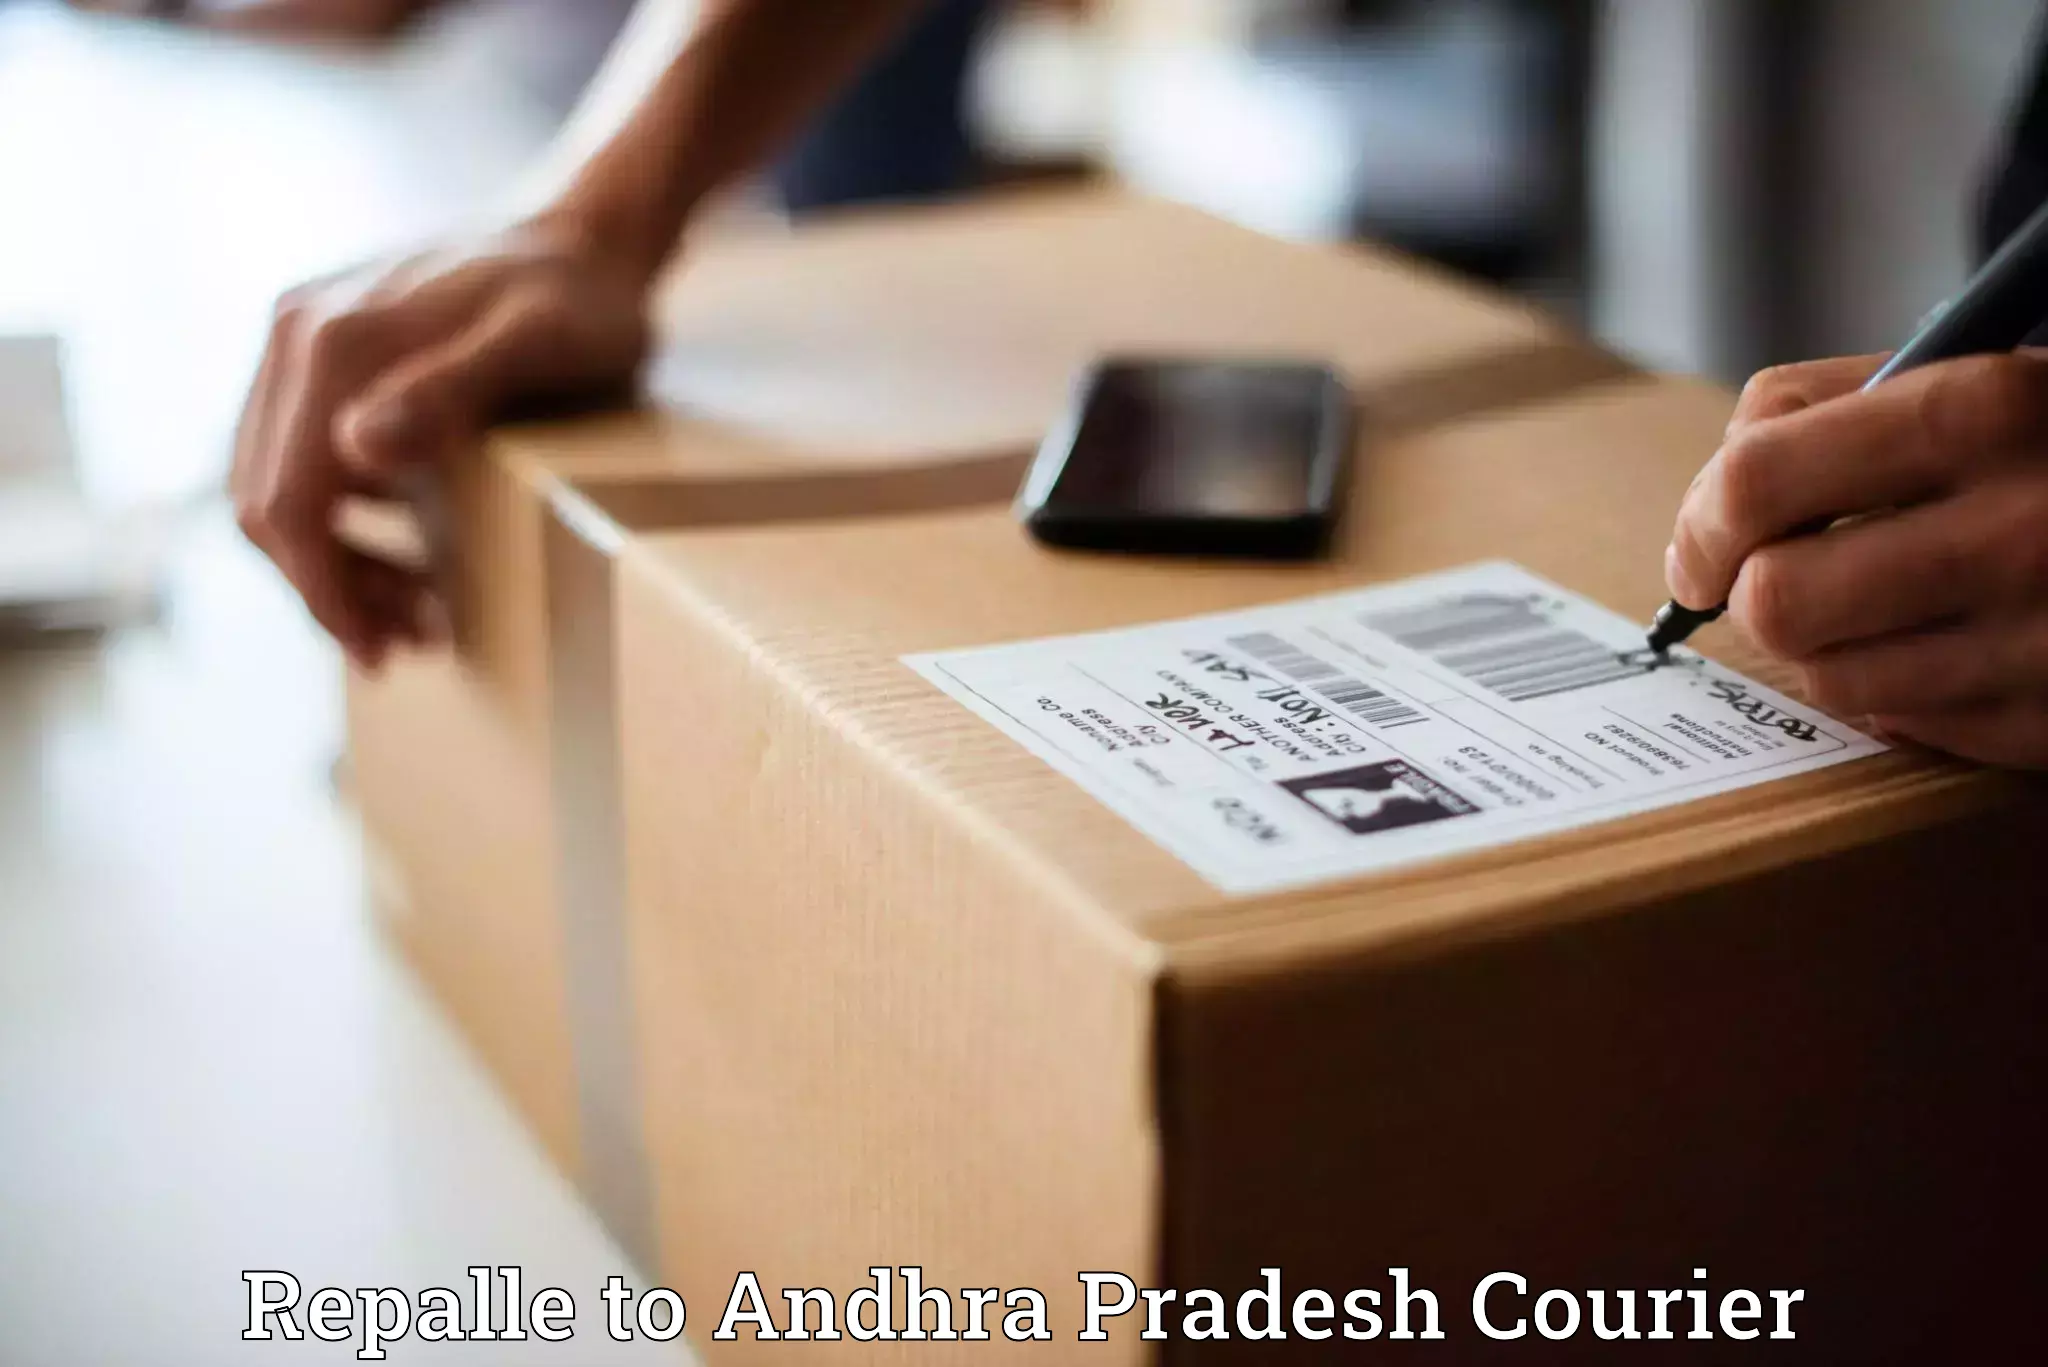 High-priority parcel service Repalle to Kondapi